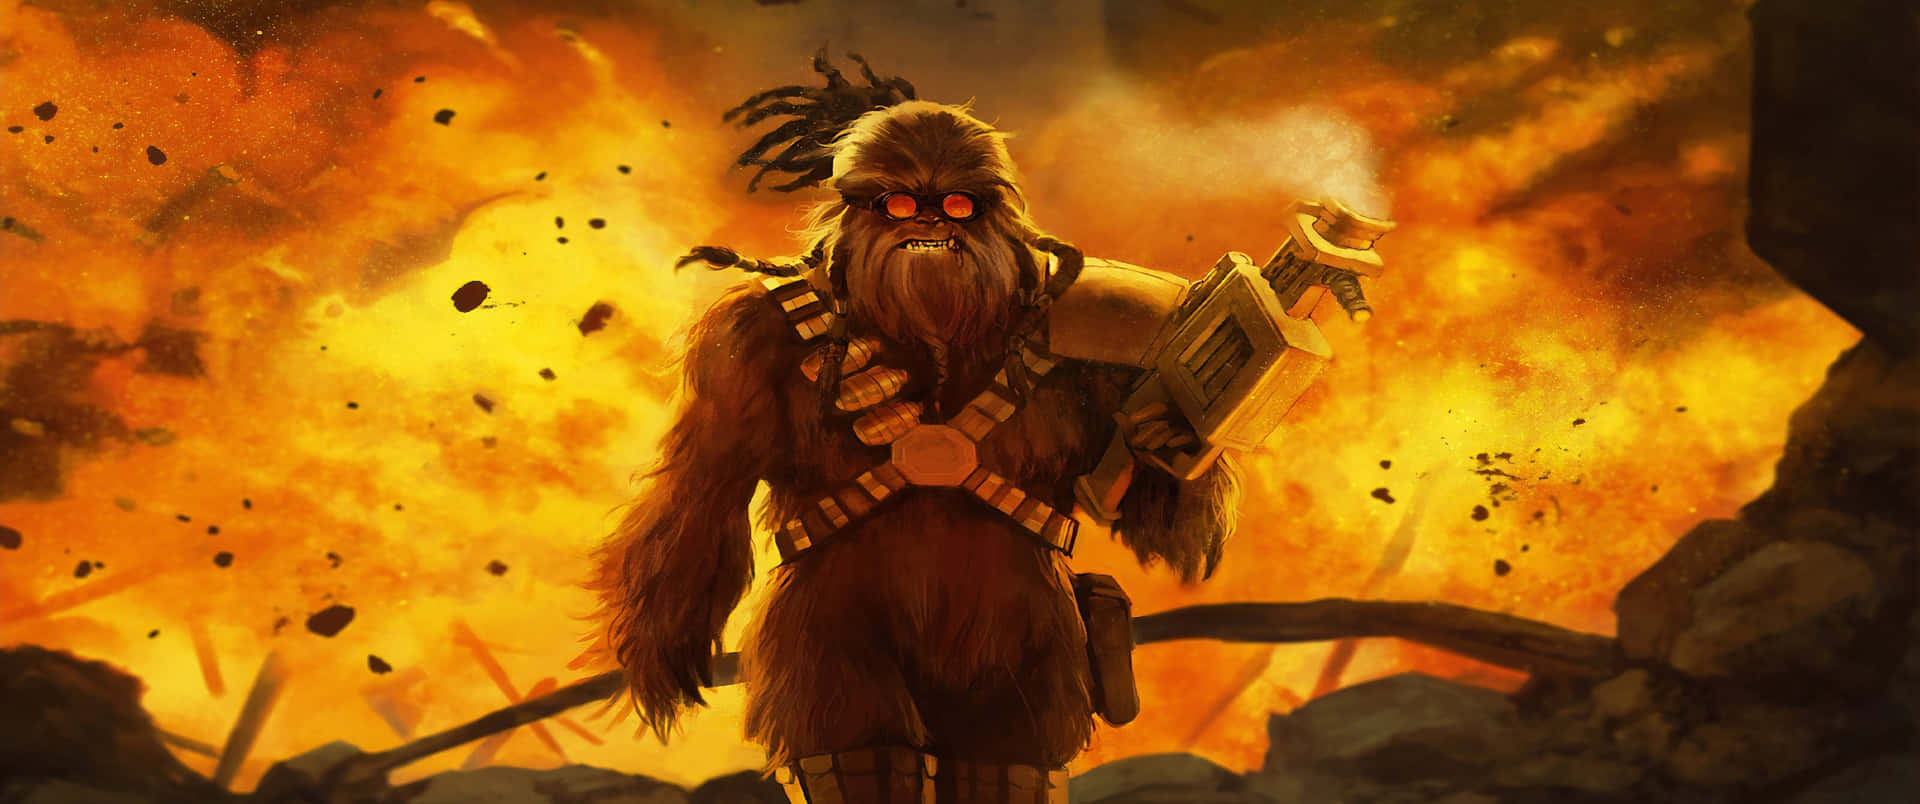 Wookiee_ Warrior_ Explosion_ Background Wallpaper